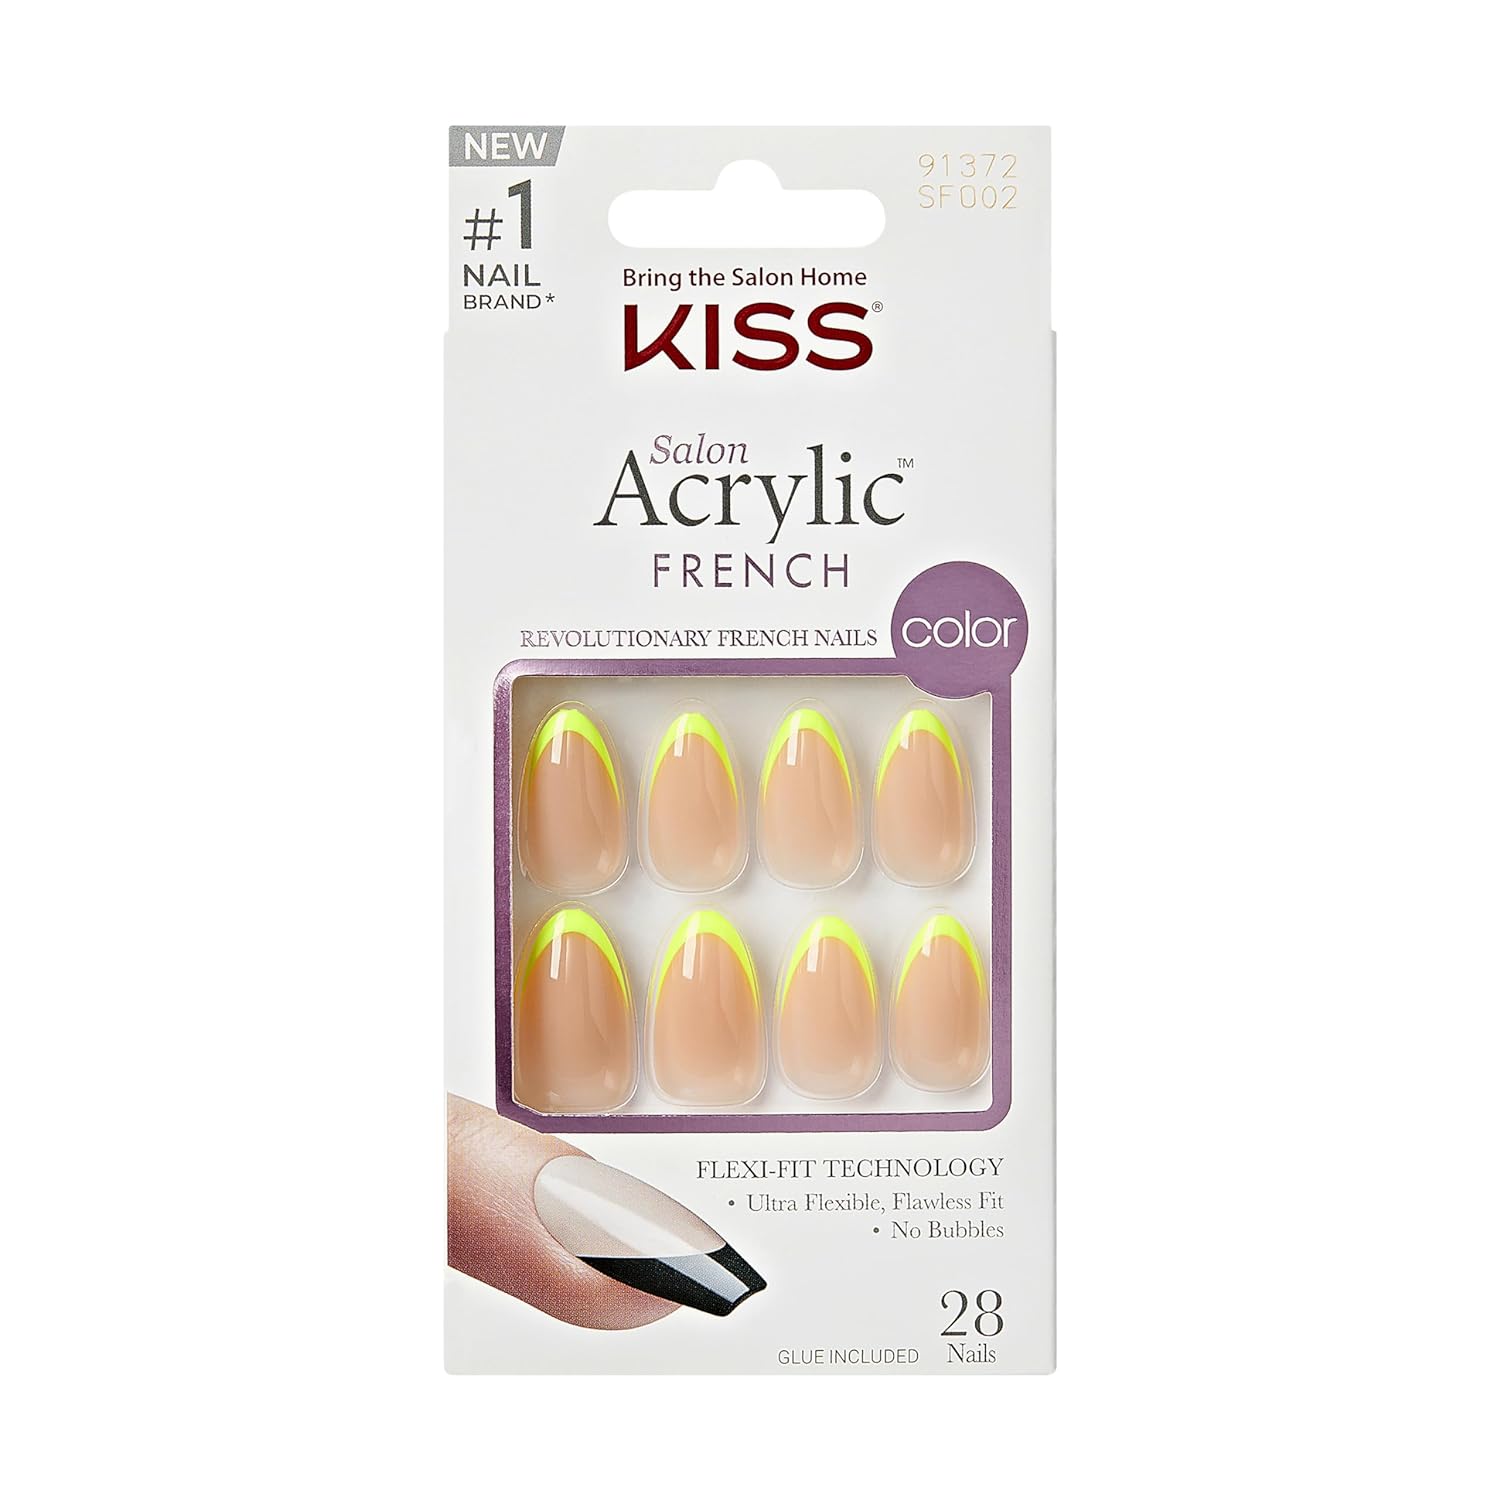 Kiss Salon Acrylic French Nails - Light Neon Yellow, 0.07 Oz (SFO02)